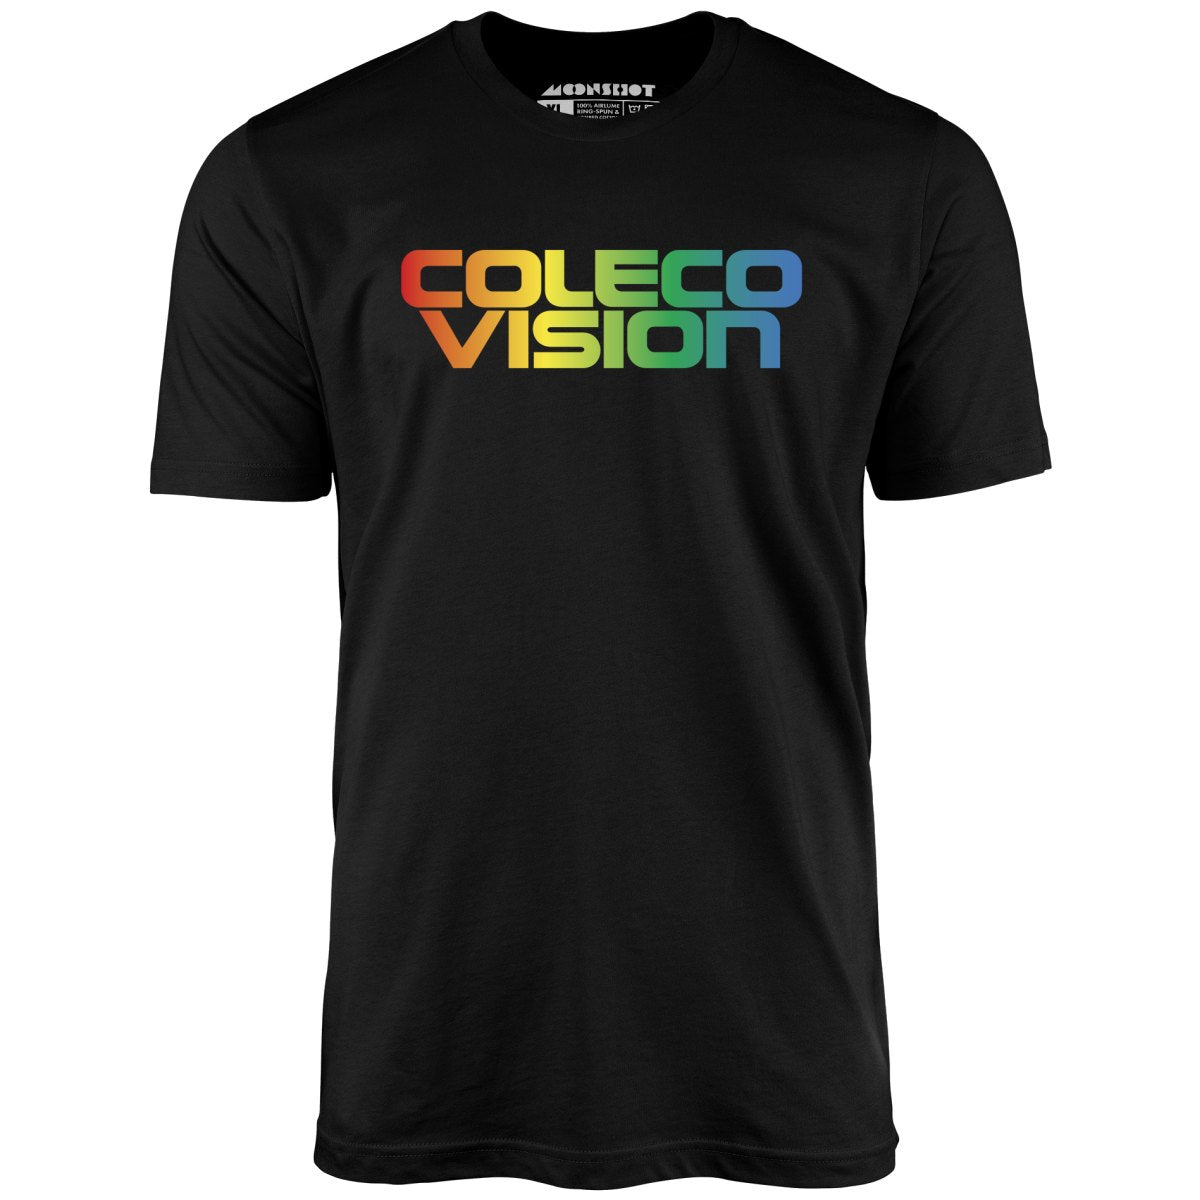 ColecoVision - Unisex T-Shirt